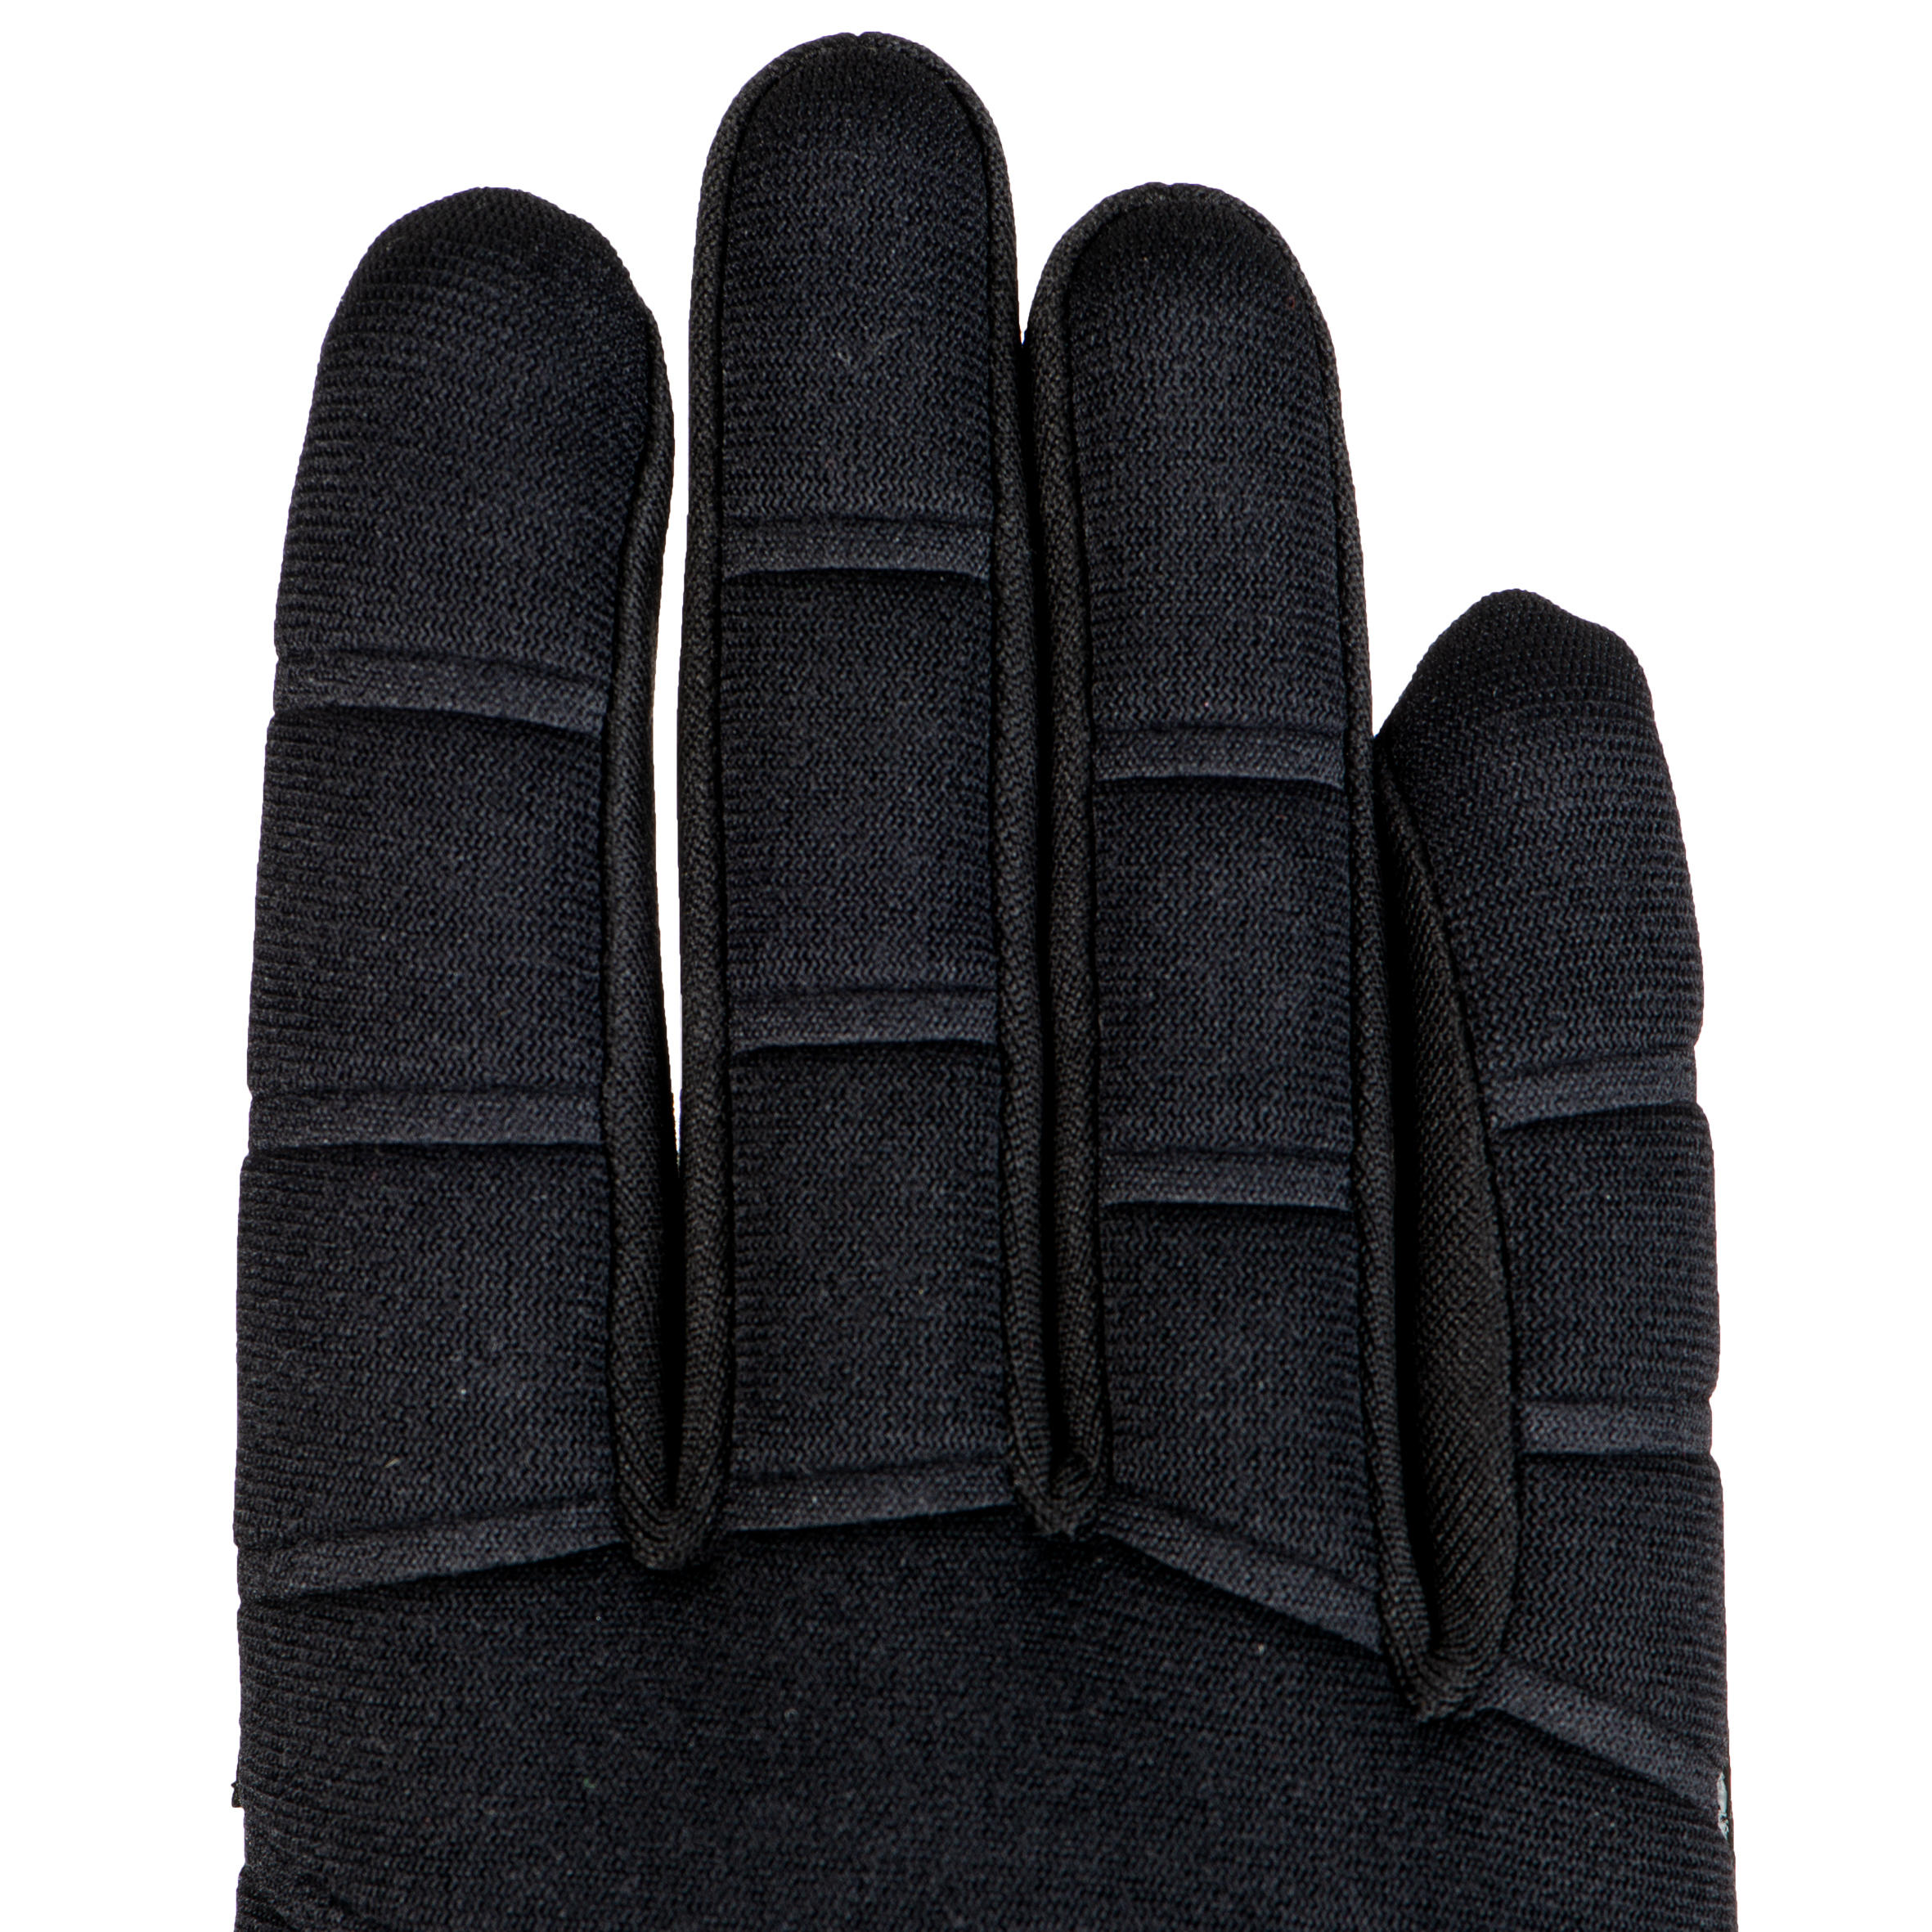 R500 Adult Winter Rugby Gloves - Black 3/8